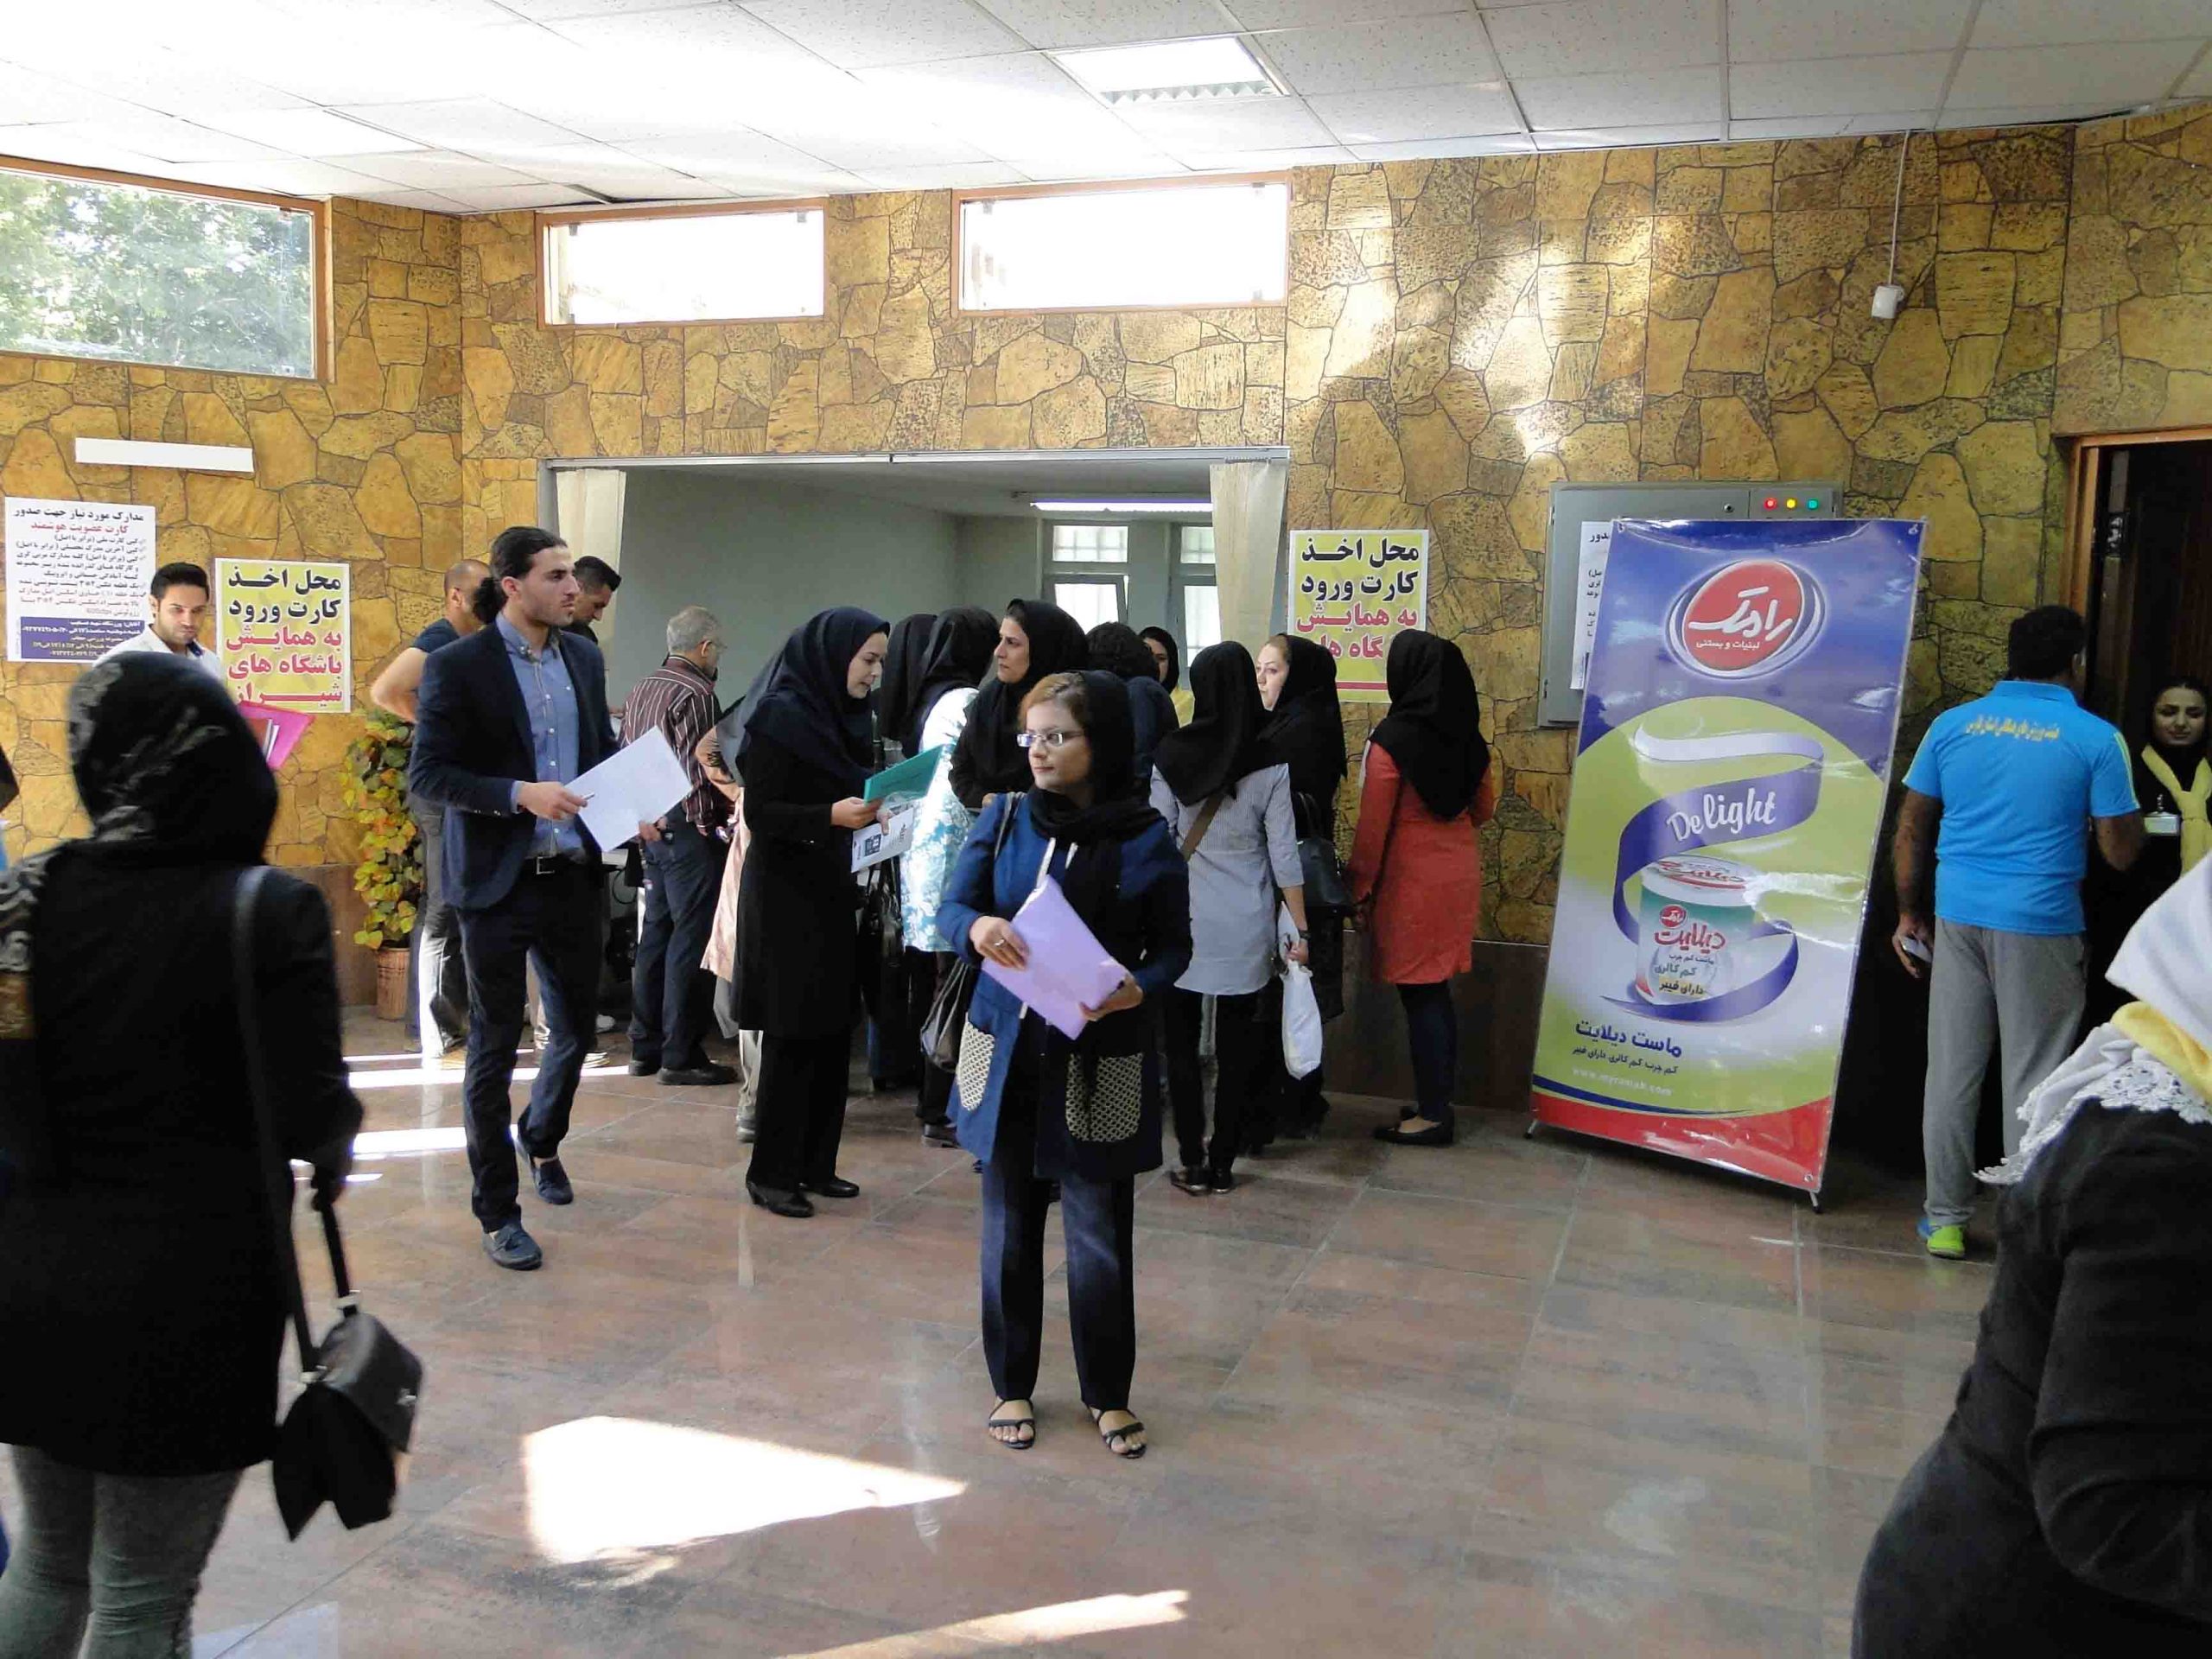 dsc01874 1 scaled اخبار برگزاری همایش مربیان آمادگی جسمانی استان فارس با حمایت شرکت رامک